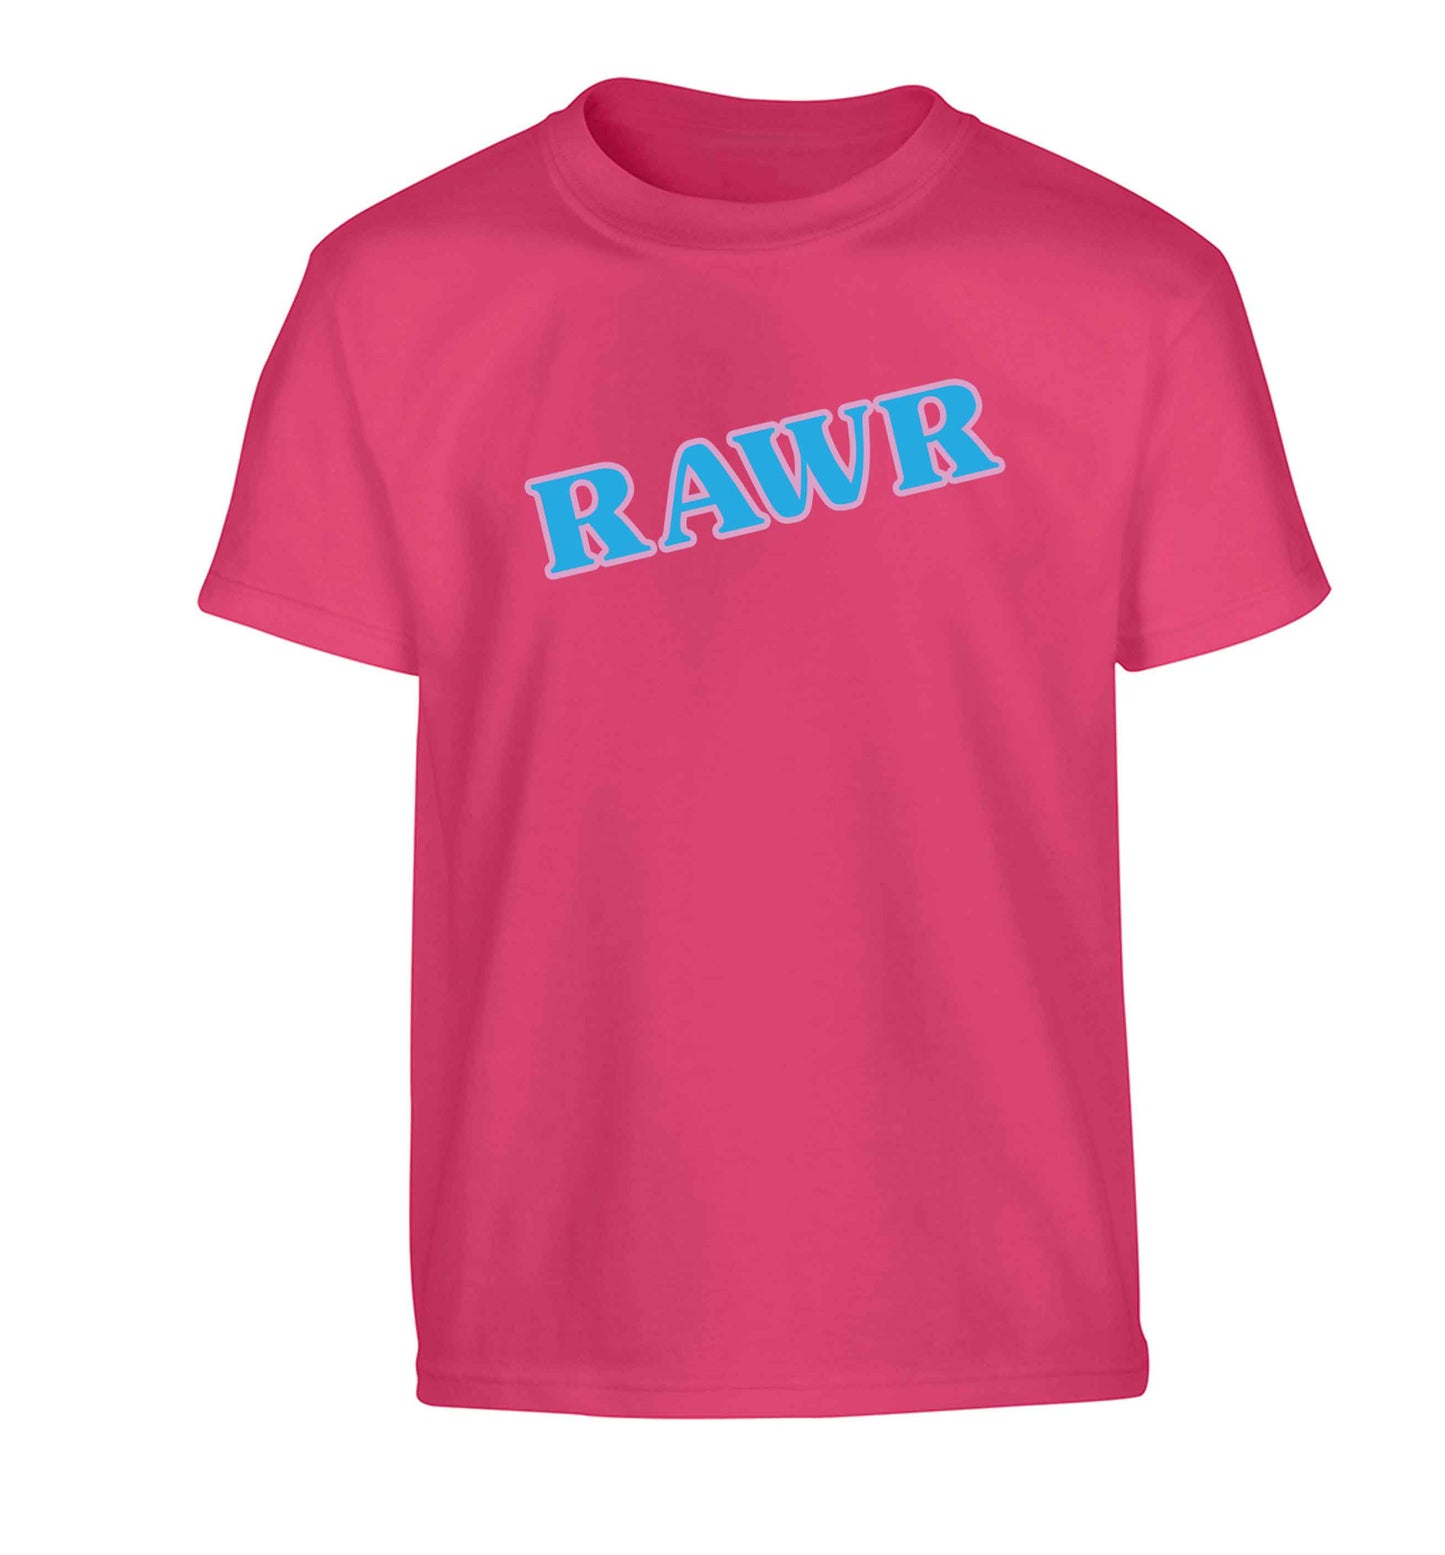 Rawr Children's pink Tshirt 12-13 Years